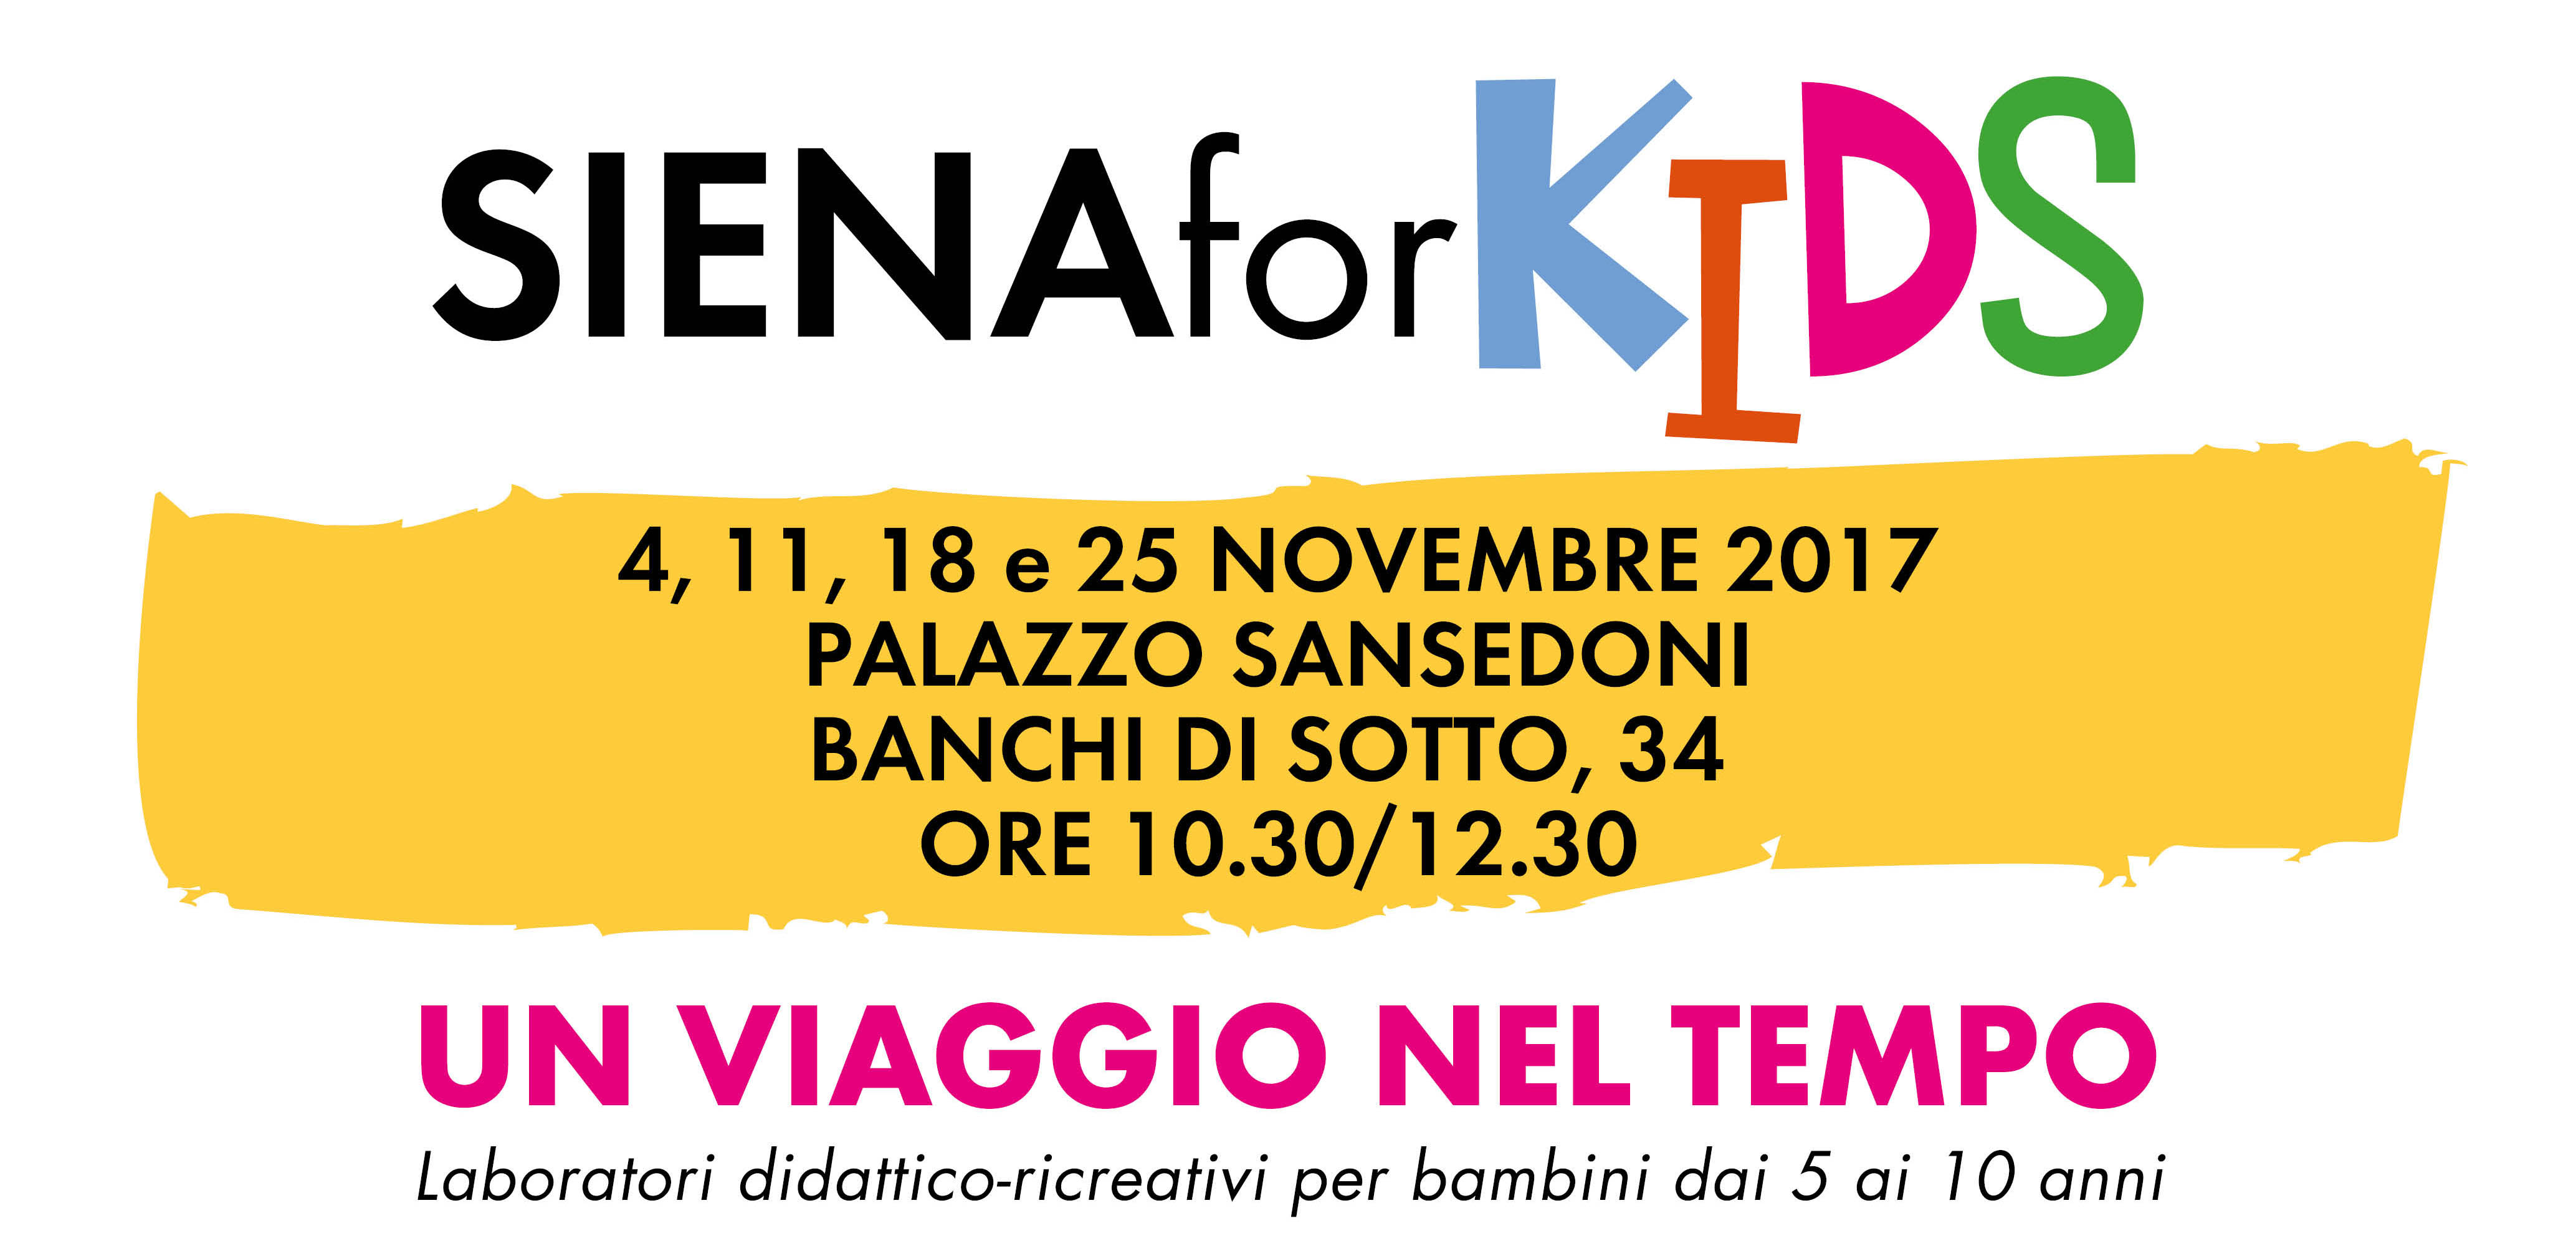 Siena for Kids a Palazzo Sansedoni